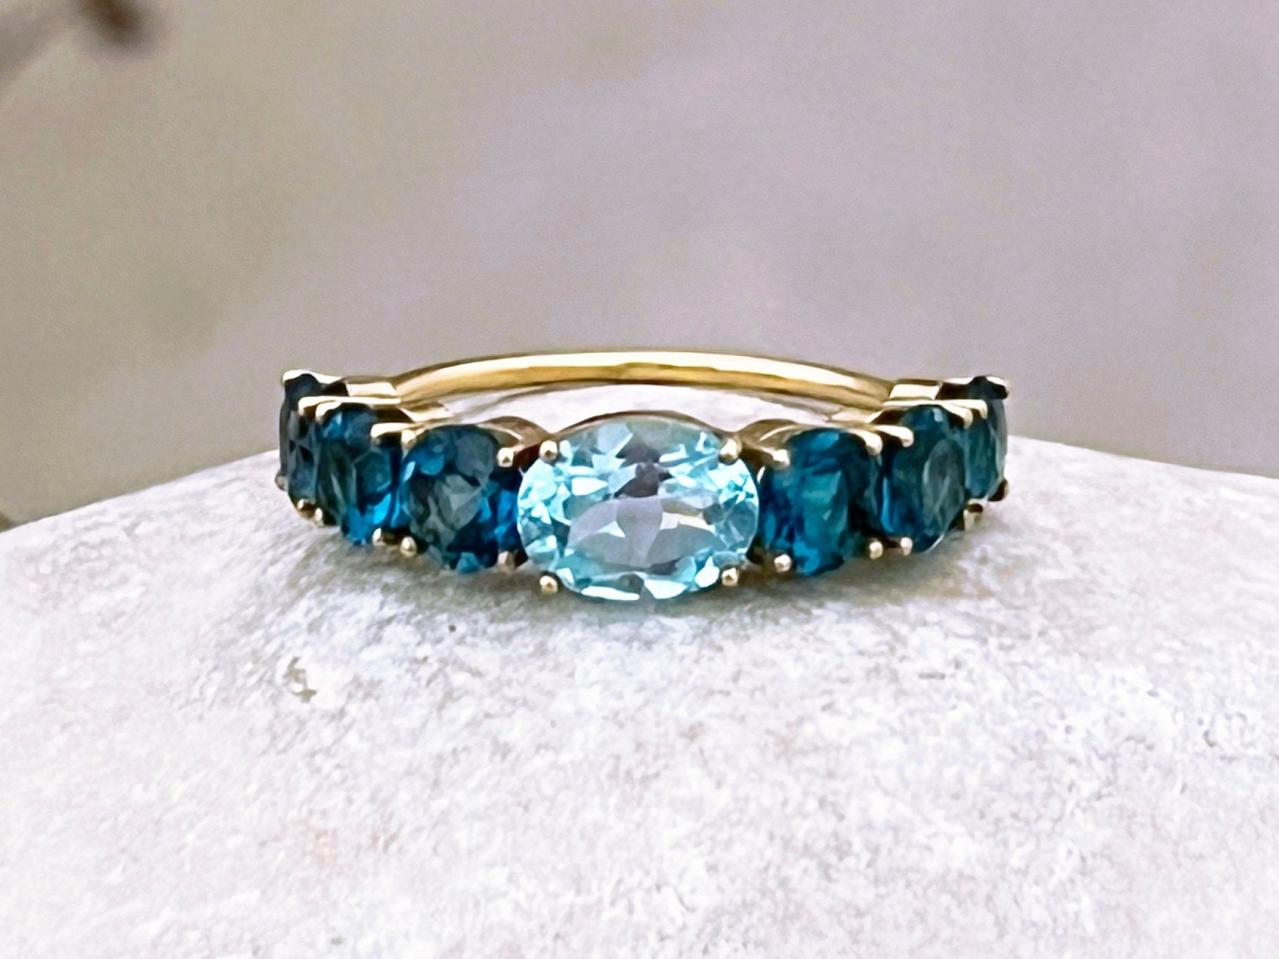  Blue topaz band ring, 9k gold or 18k gold, wedding ring, anniversary ring, engagement ring, gemstone ring